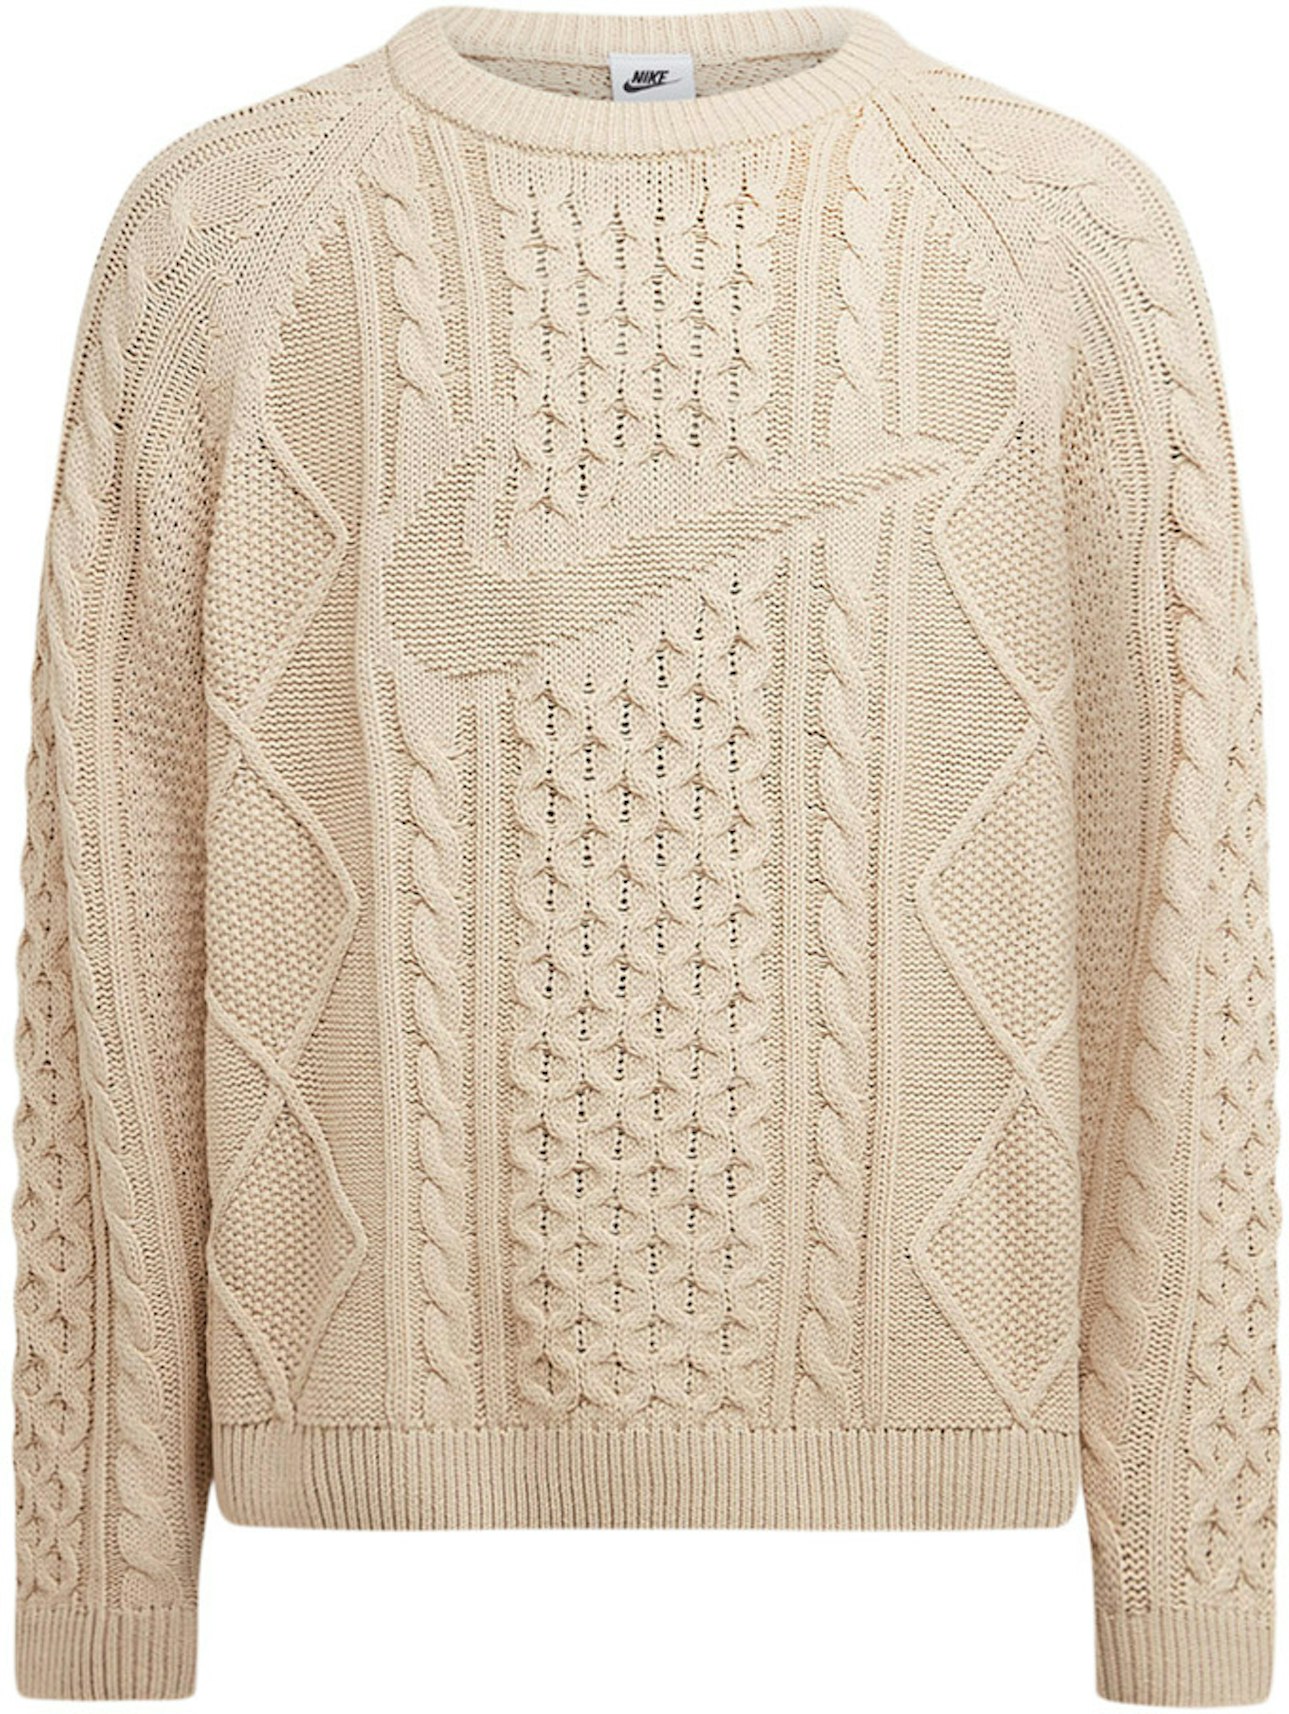 Orden alfabetico Necesario esqueleto Nike Life Cable Knit Sweater Rattan Men's - US